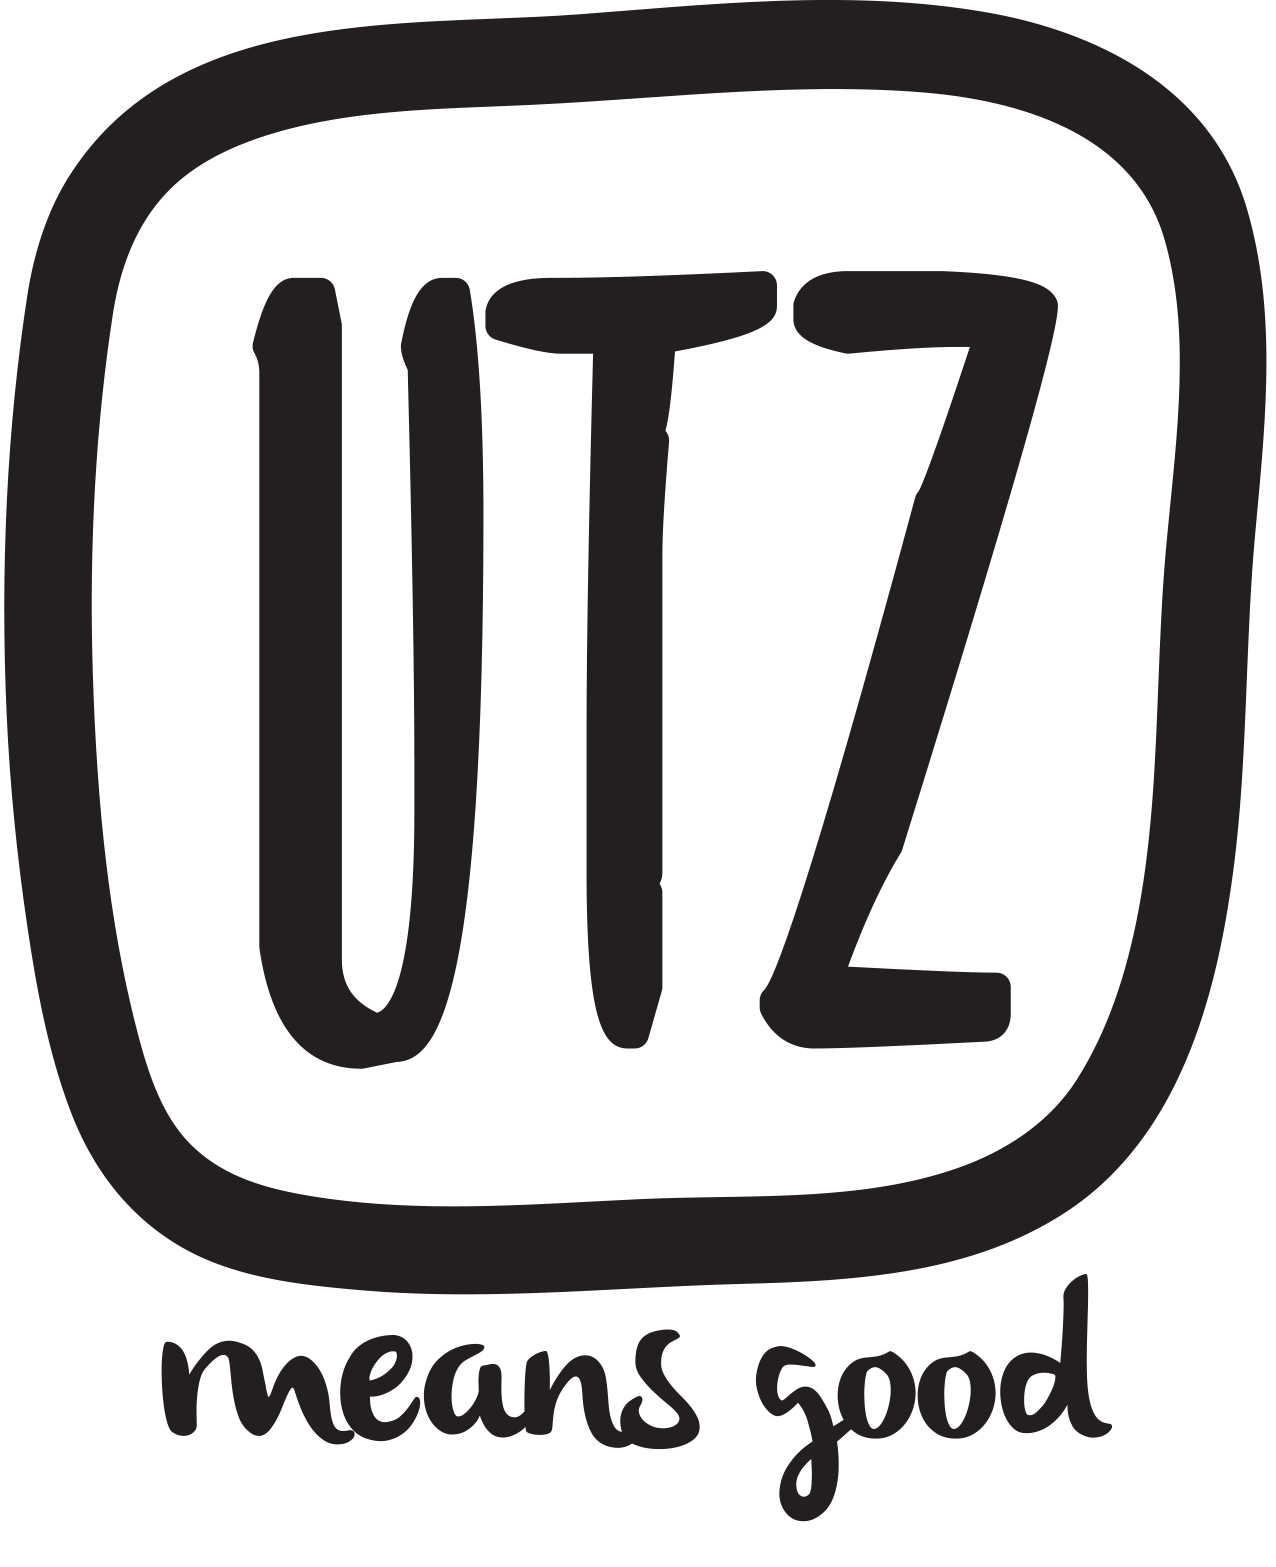 UTZ Means Good